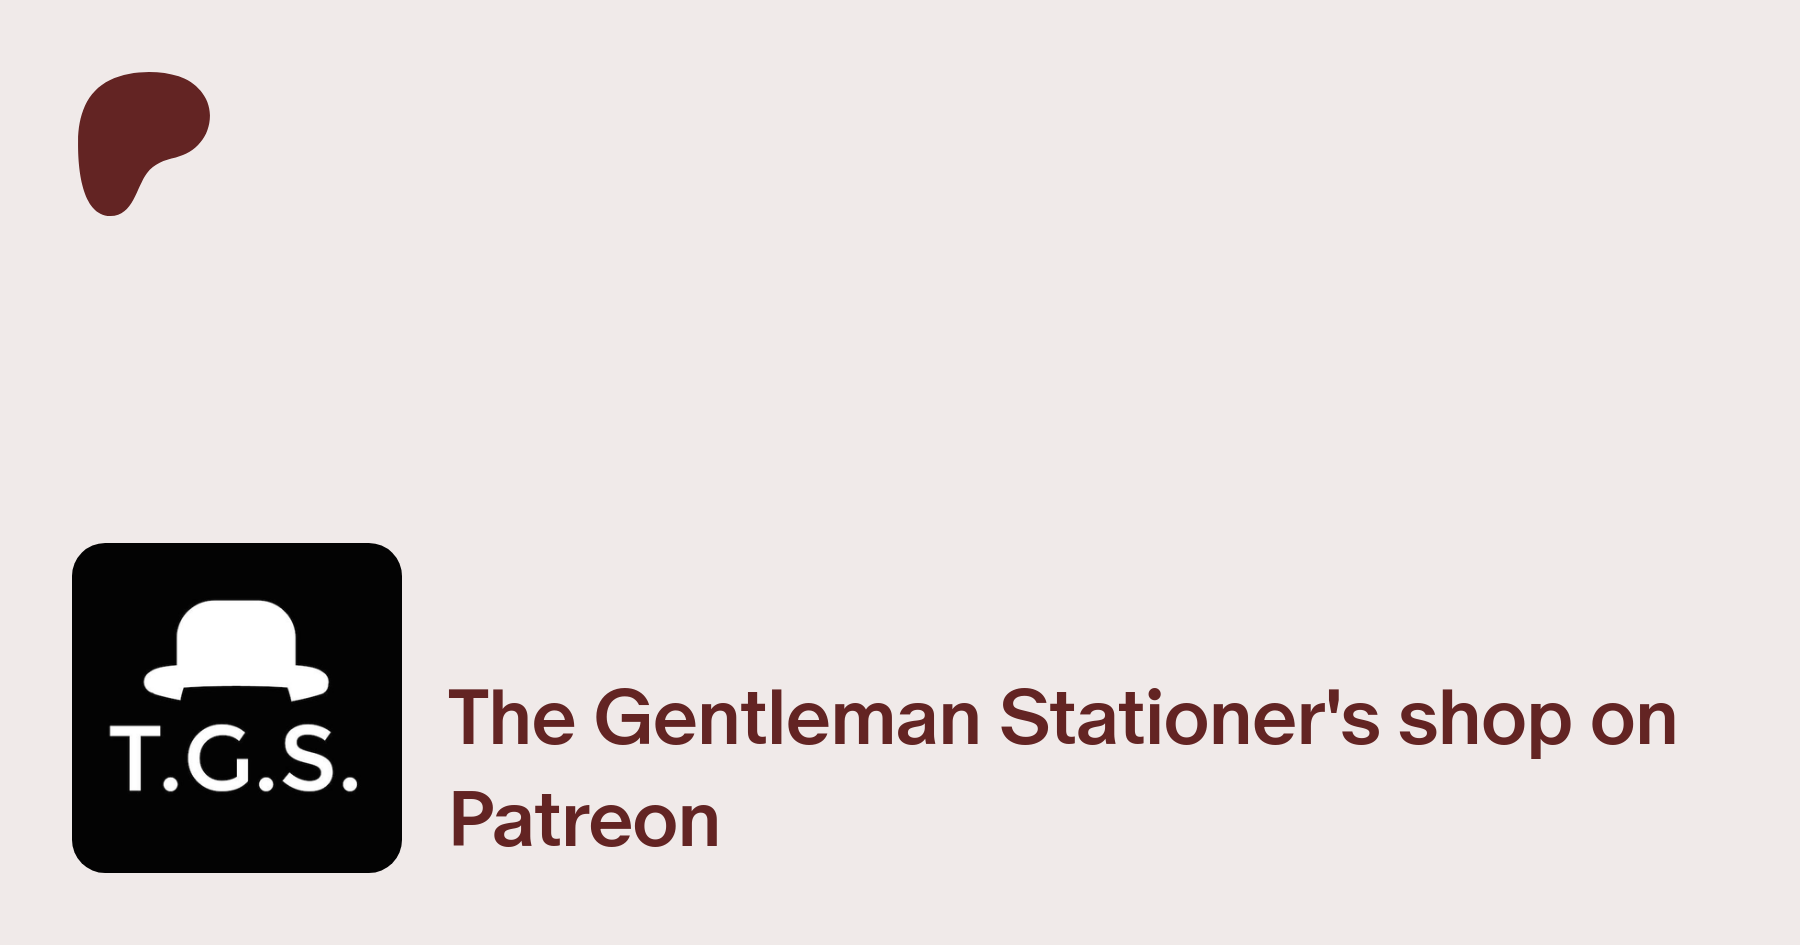 The Gentleman Stationer